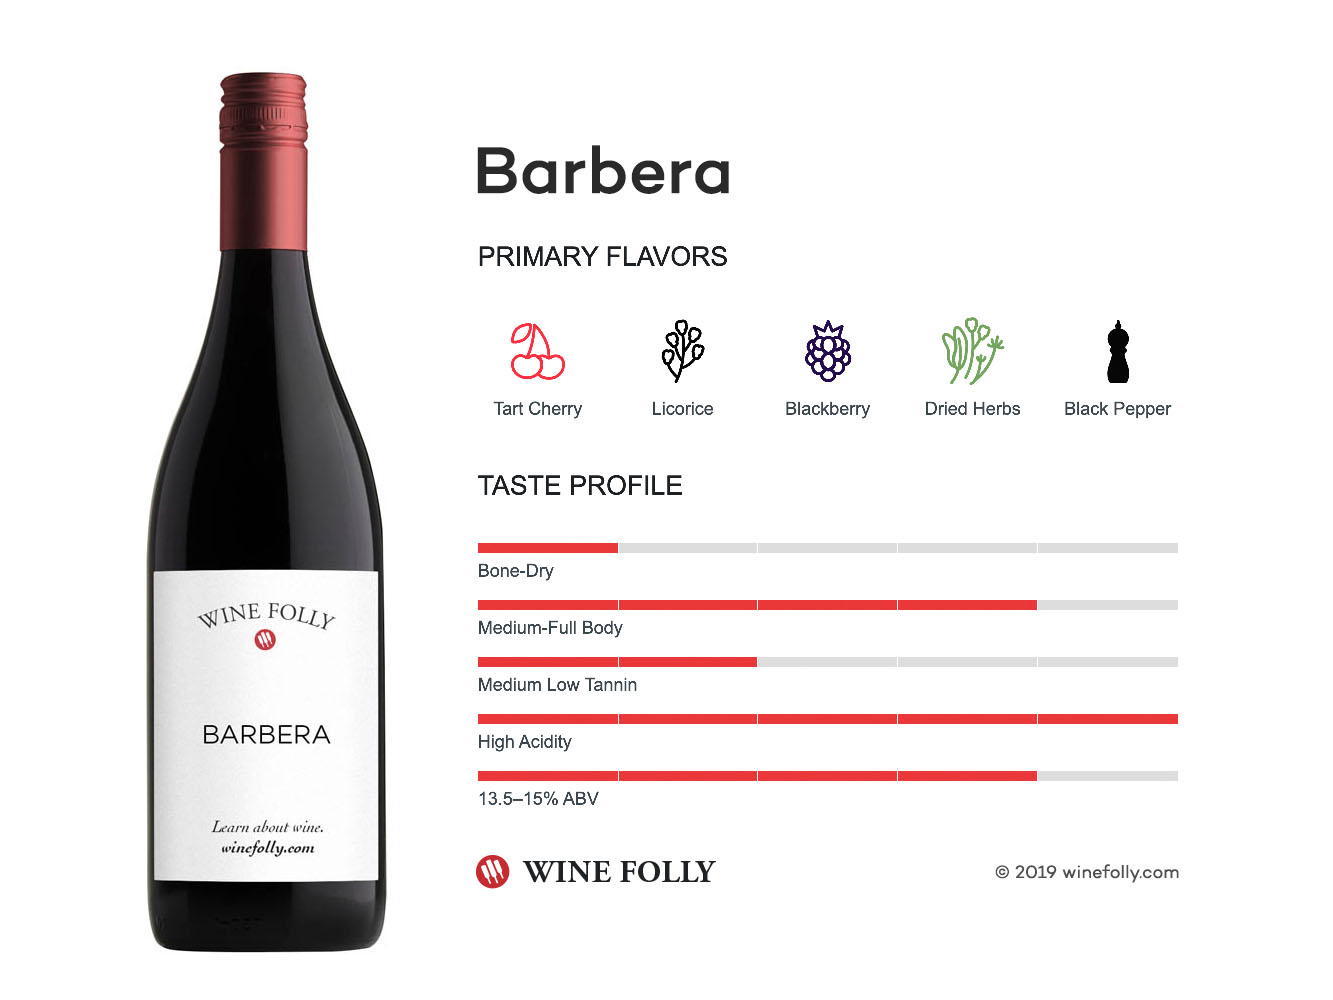 Barbera wine taste profile - infographic by Wine Folly